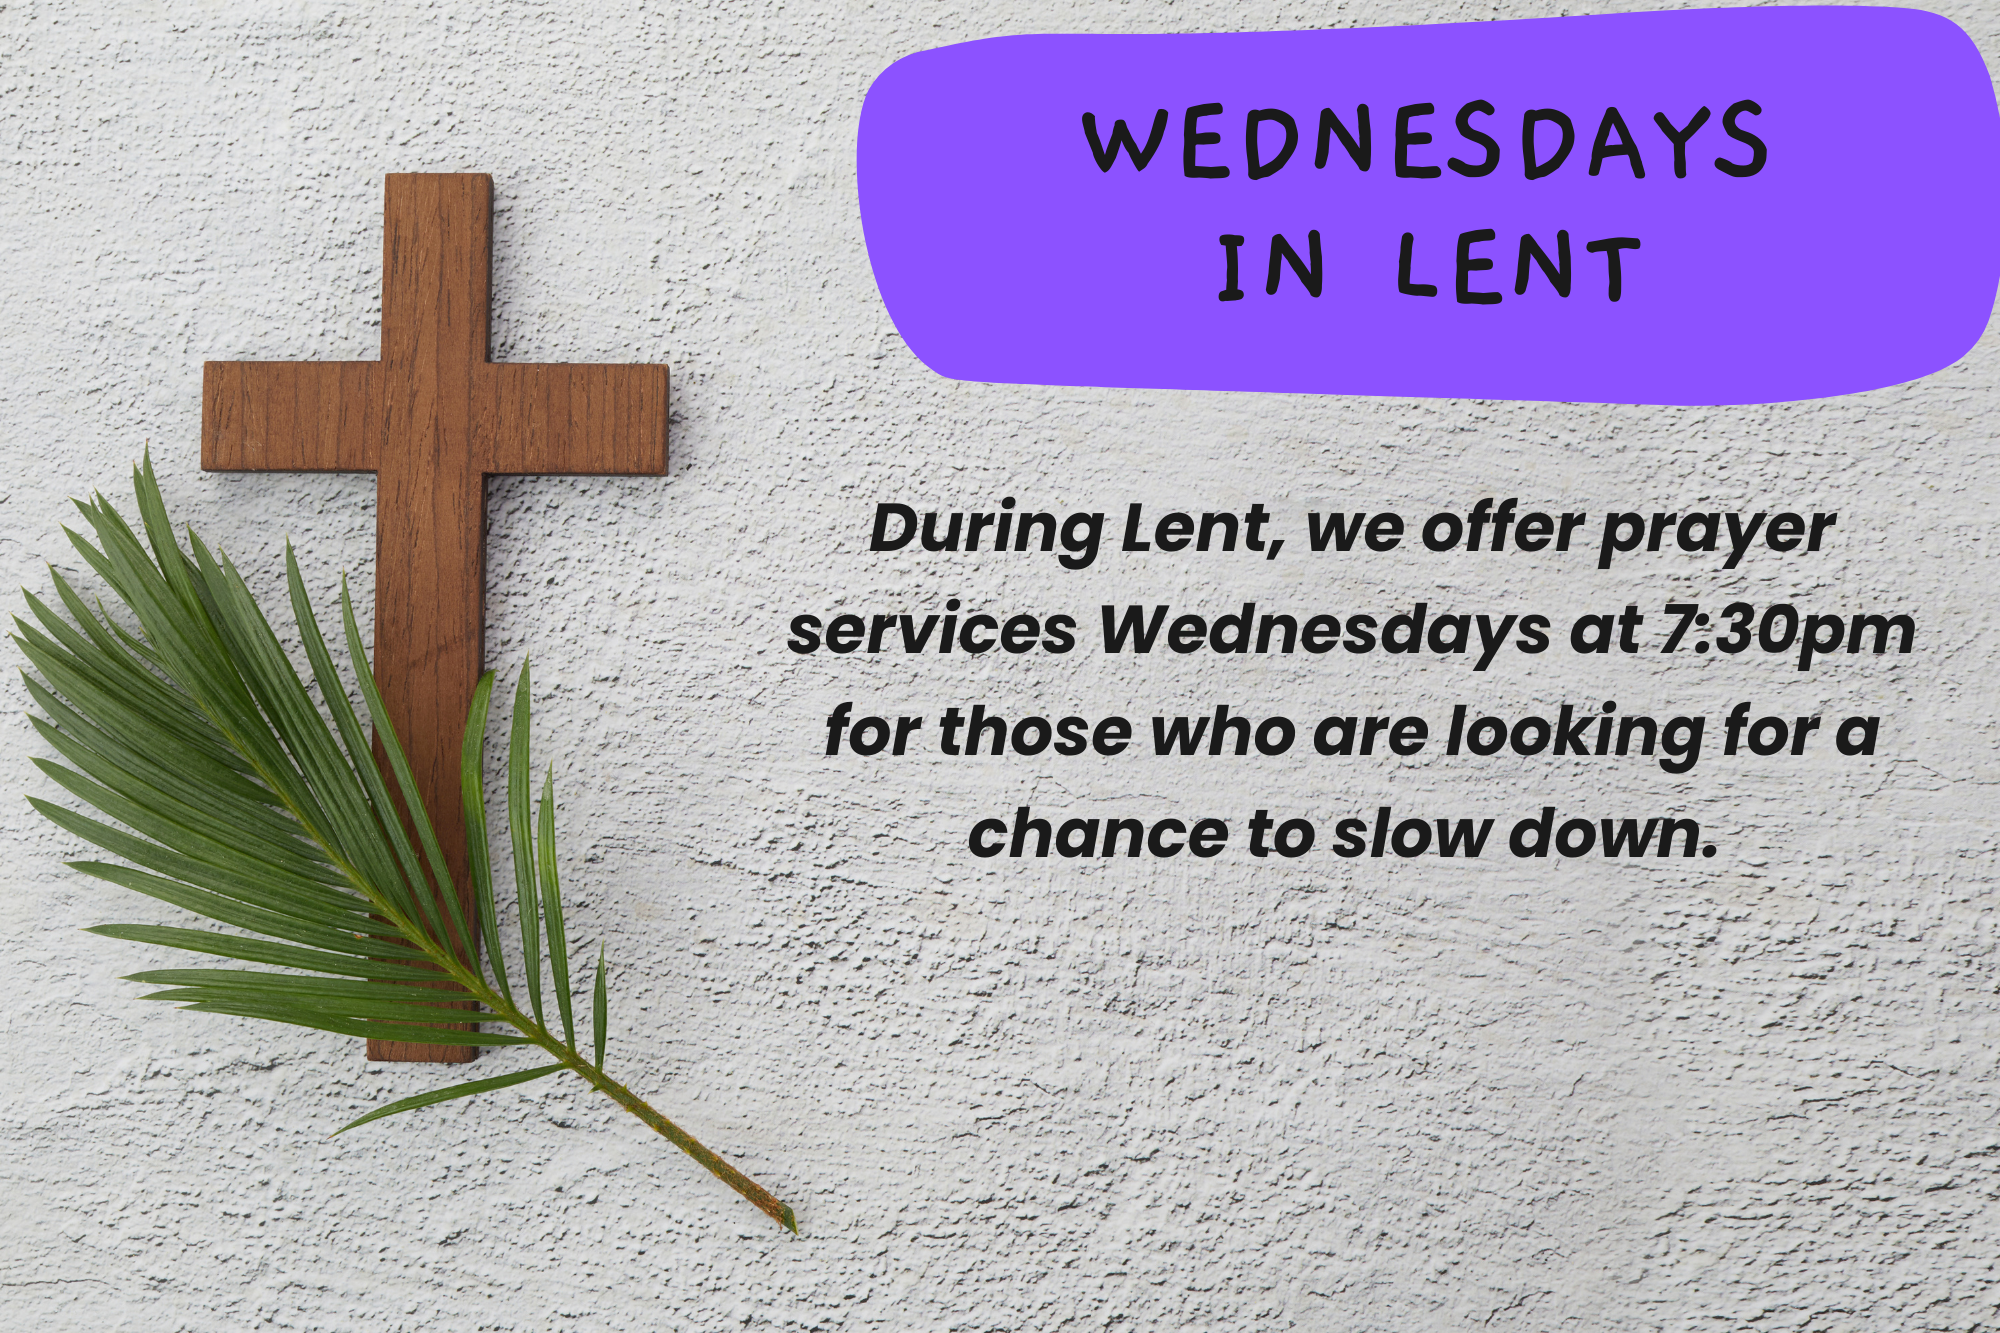 Wednesdays in Lent